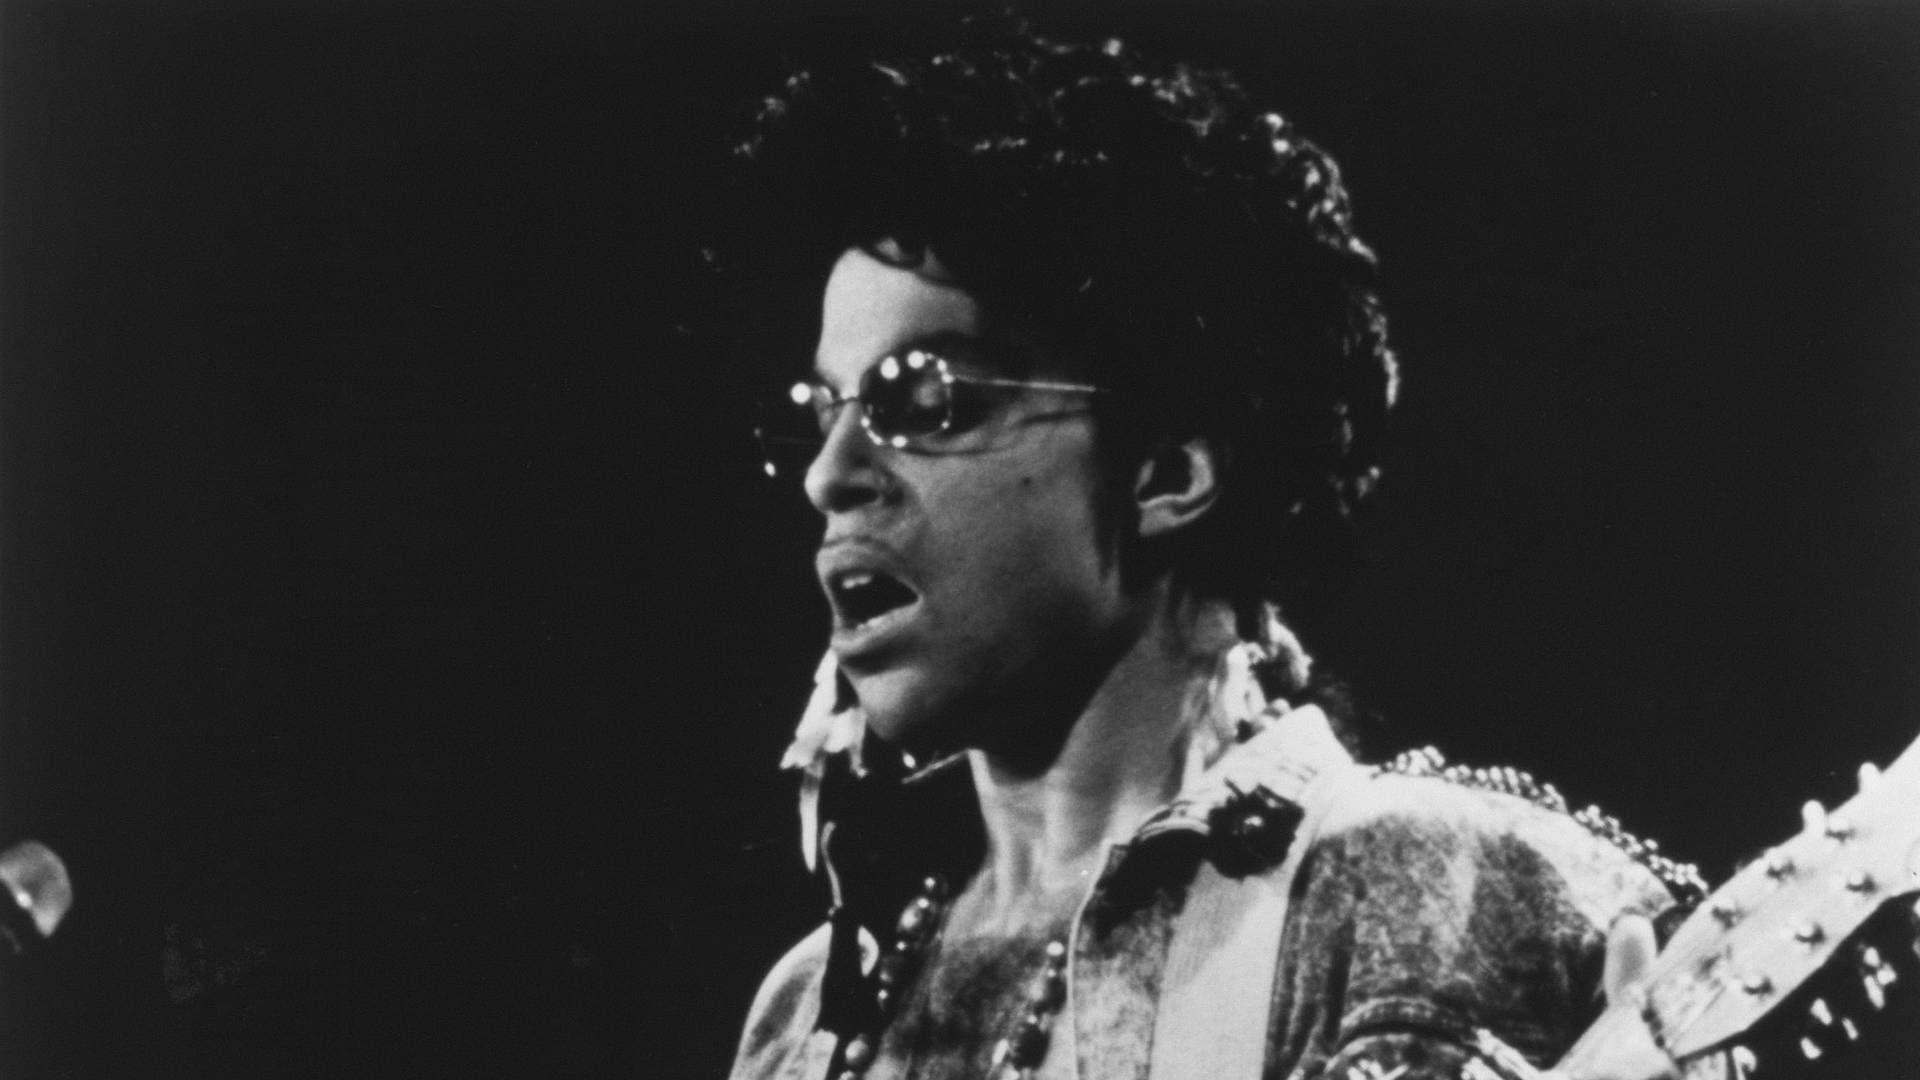 Prince: Sign O' the Times backdrop